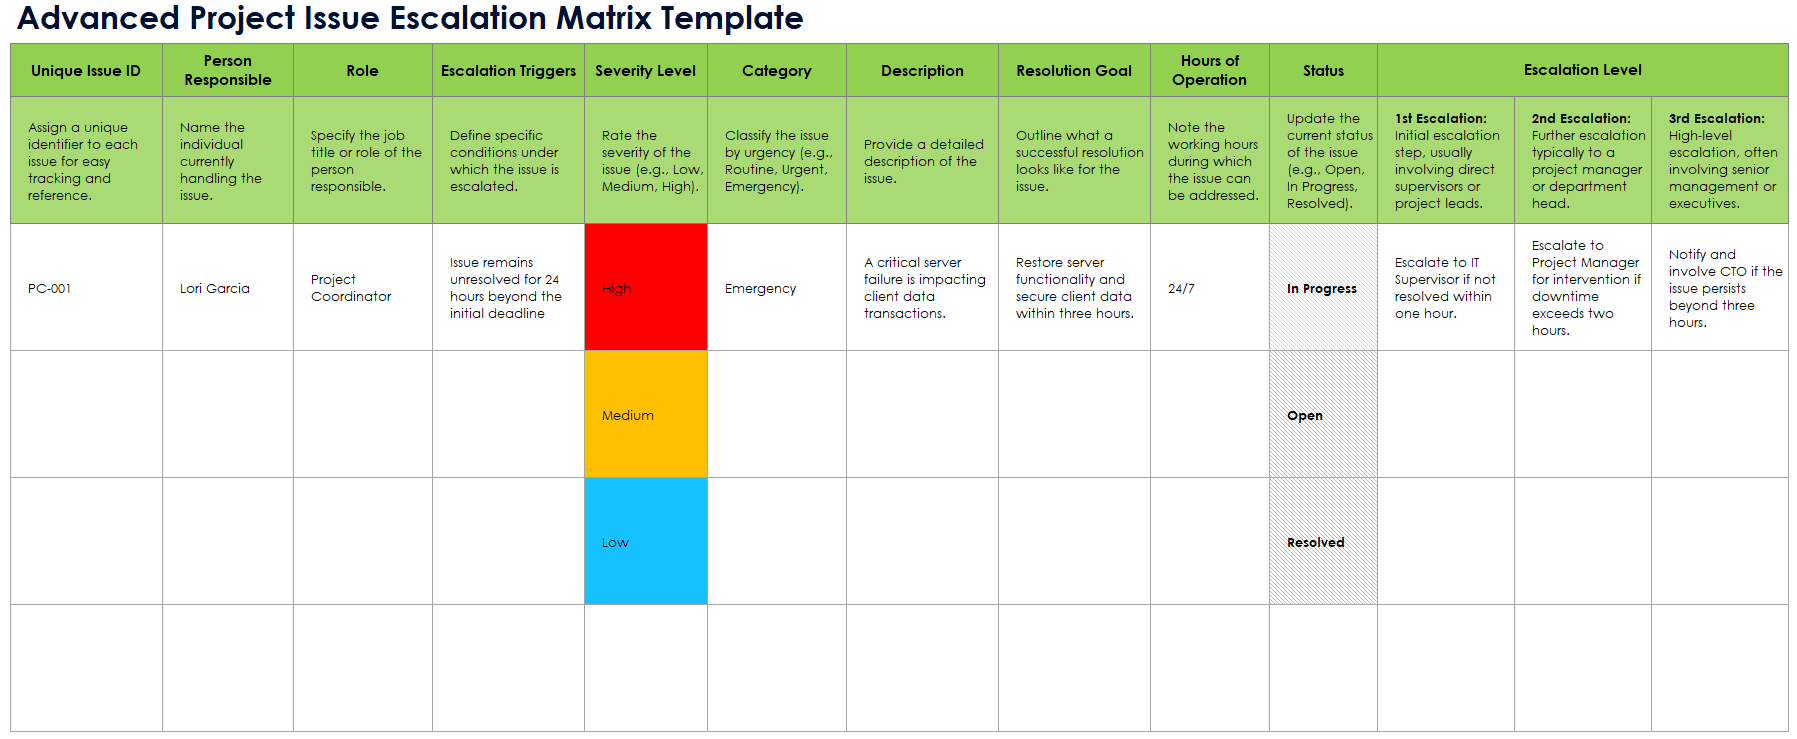 Advanced Project Issue Escalation Matrix Template